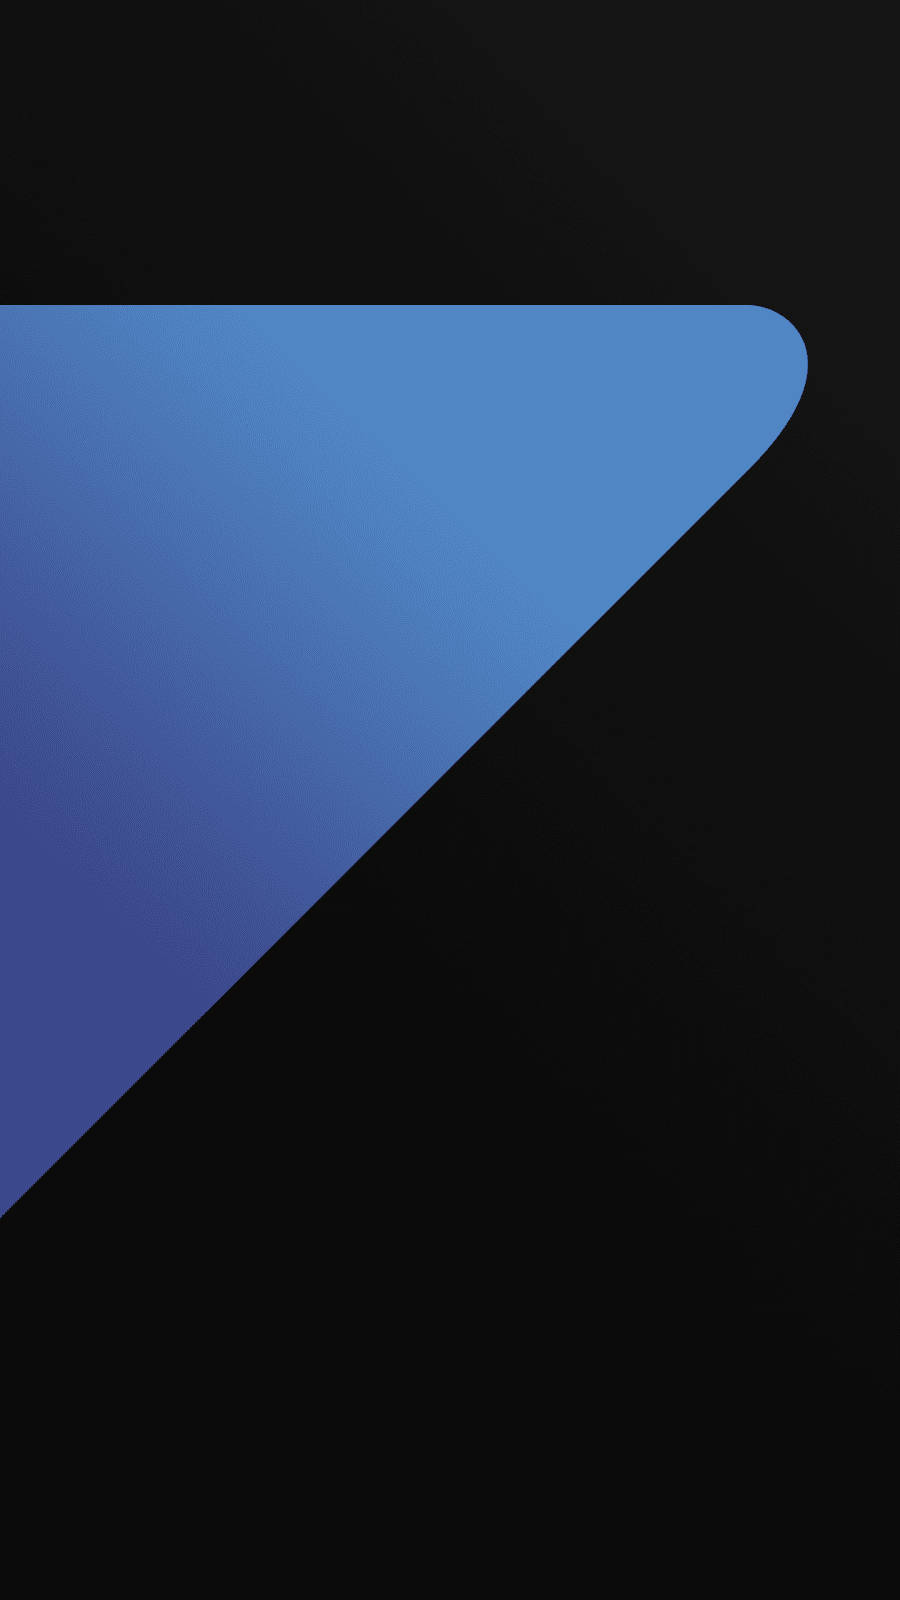 Samsung Galaxy S7 Edge Pale Blue And Black Wallpaper